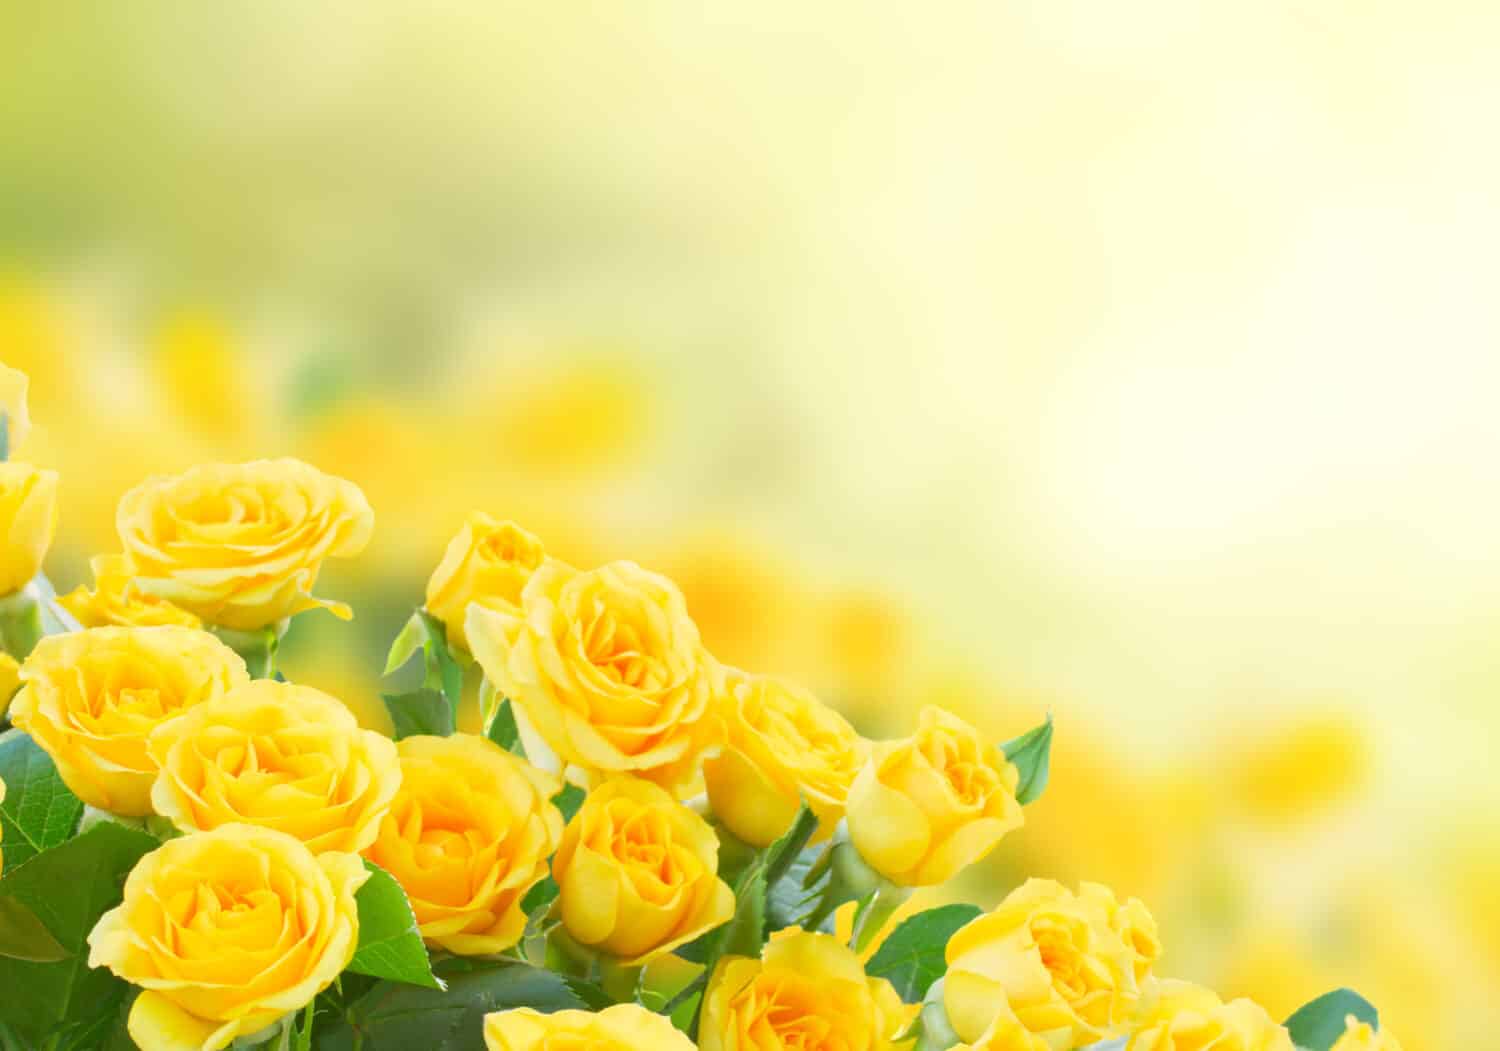 rose gialle fresche nel verde giardino soleggiato